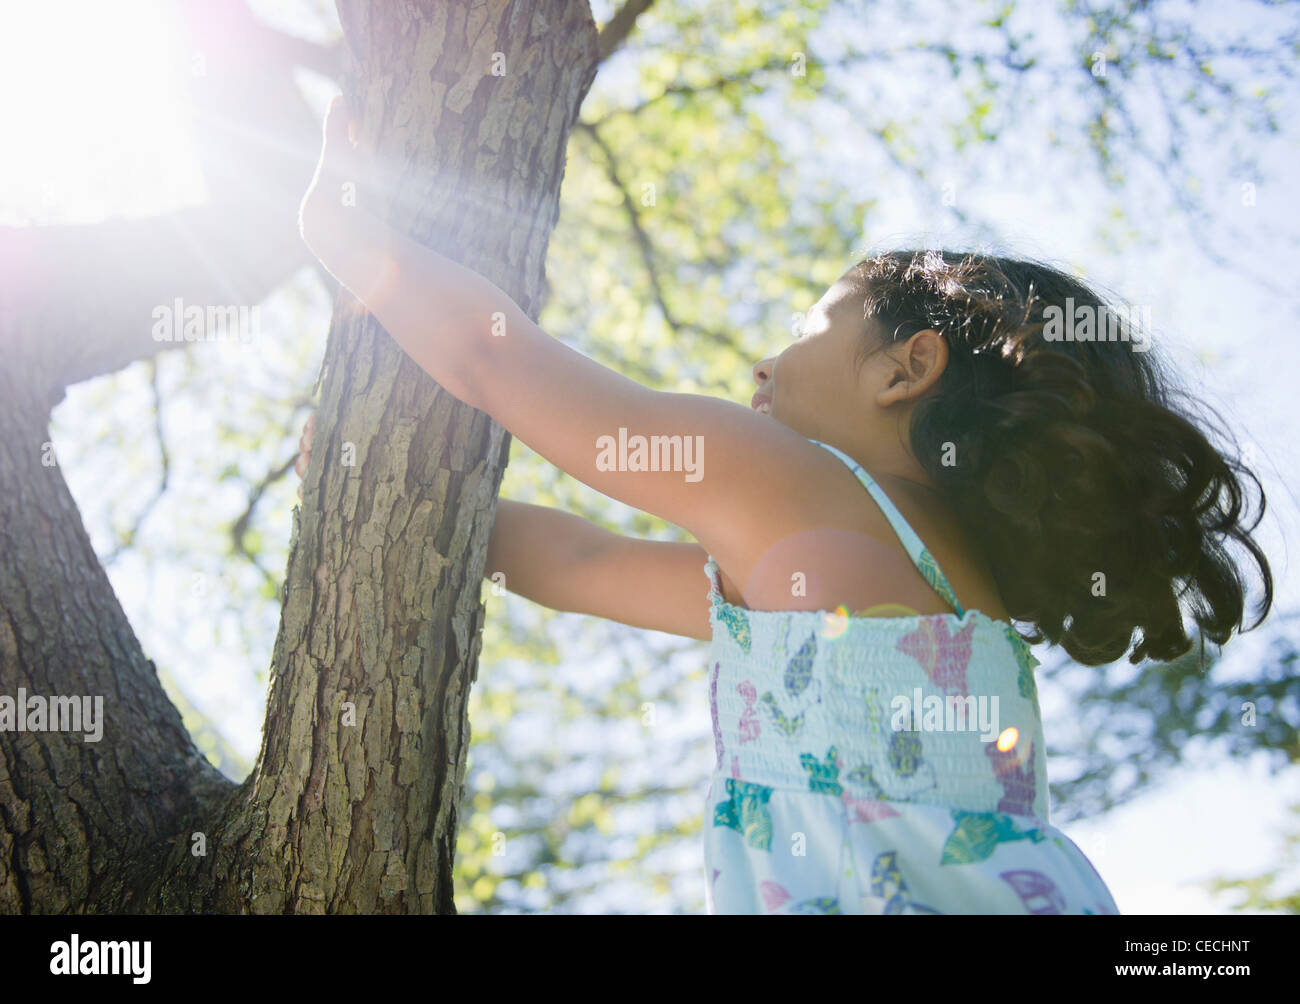 Hispanic girl climbing tree Stock Photo